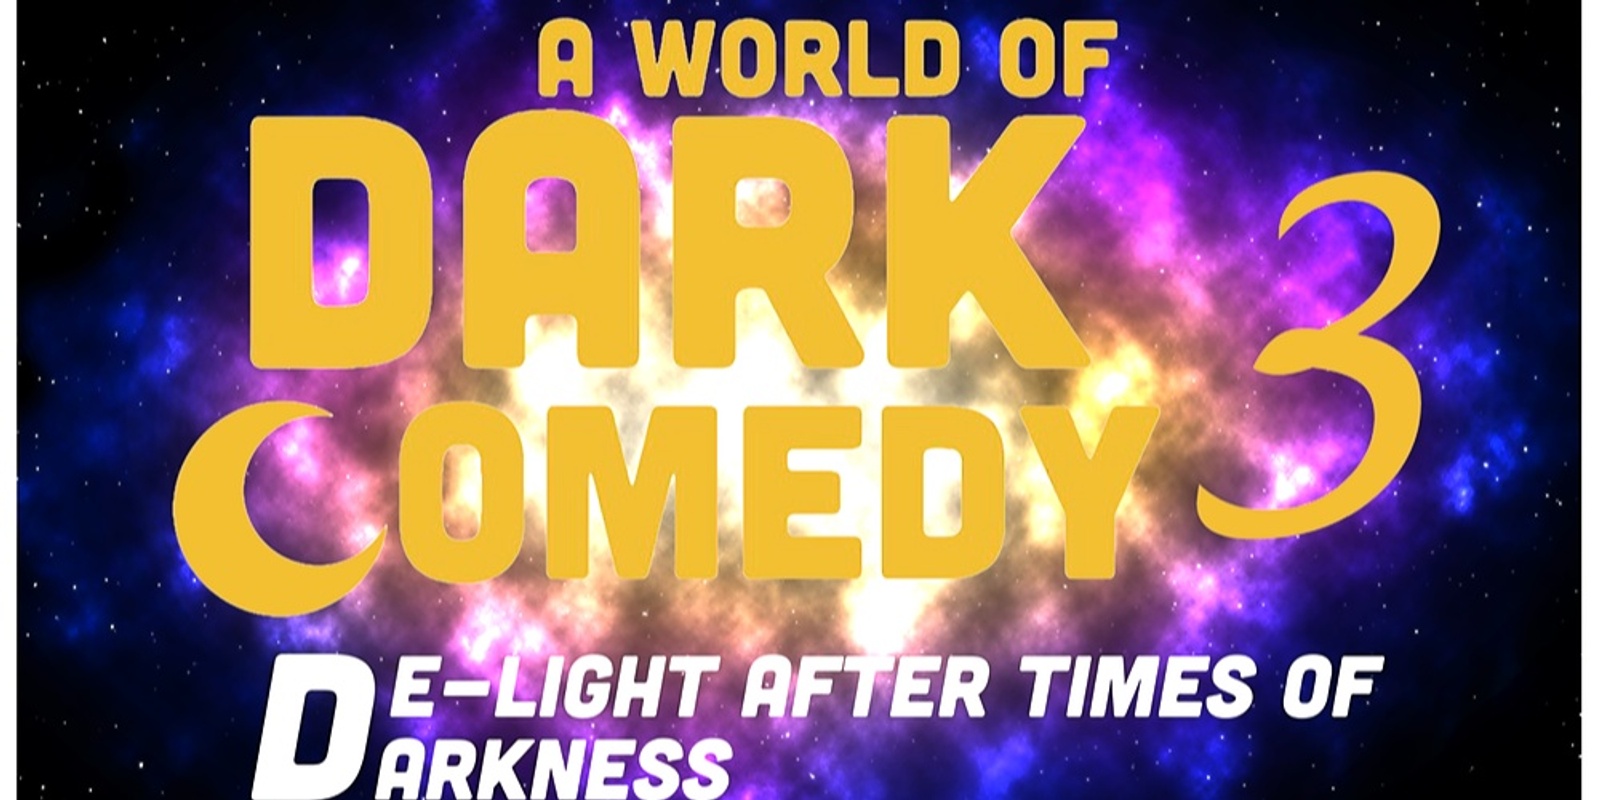 The World of Dark Comedy Film Night Humanitix